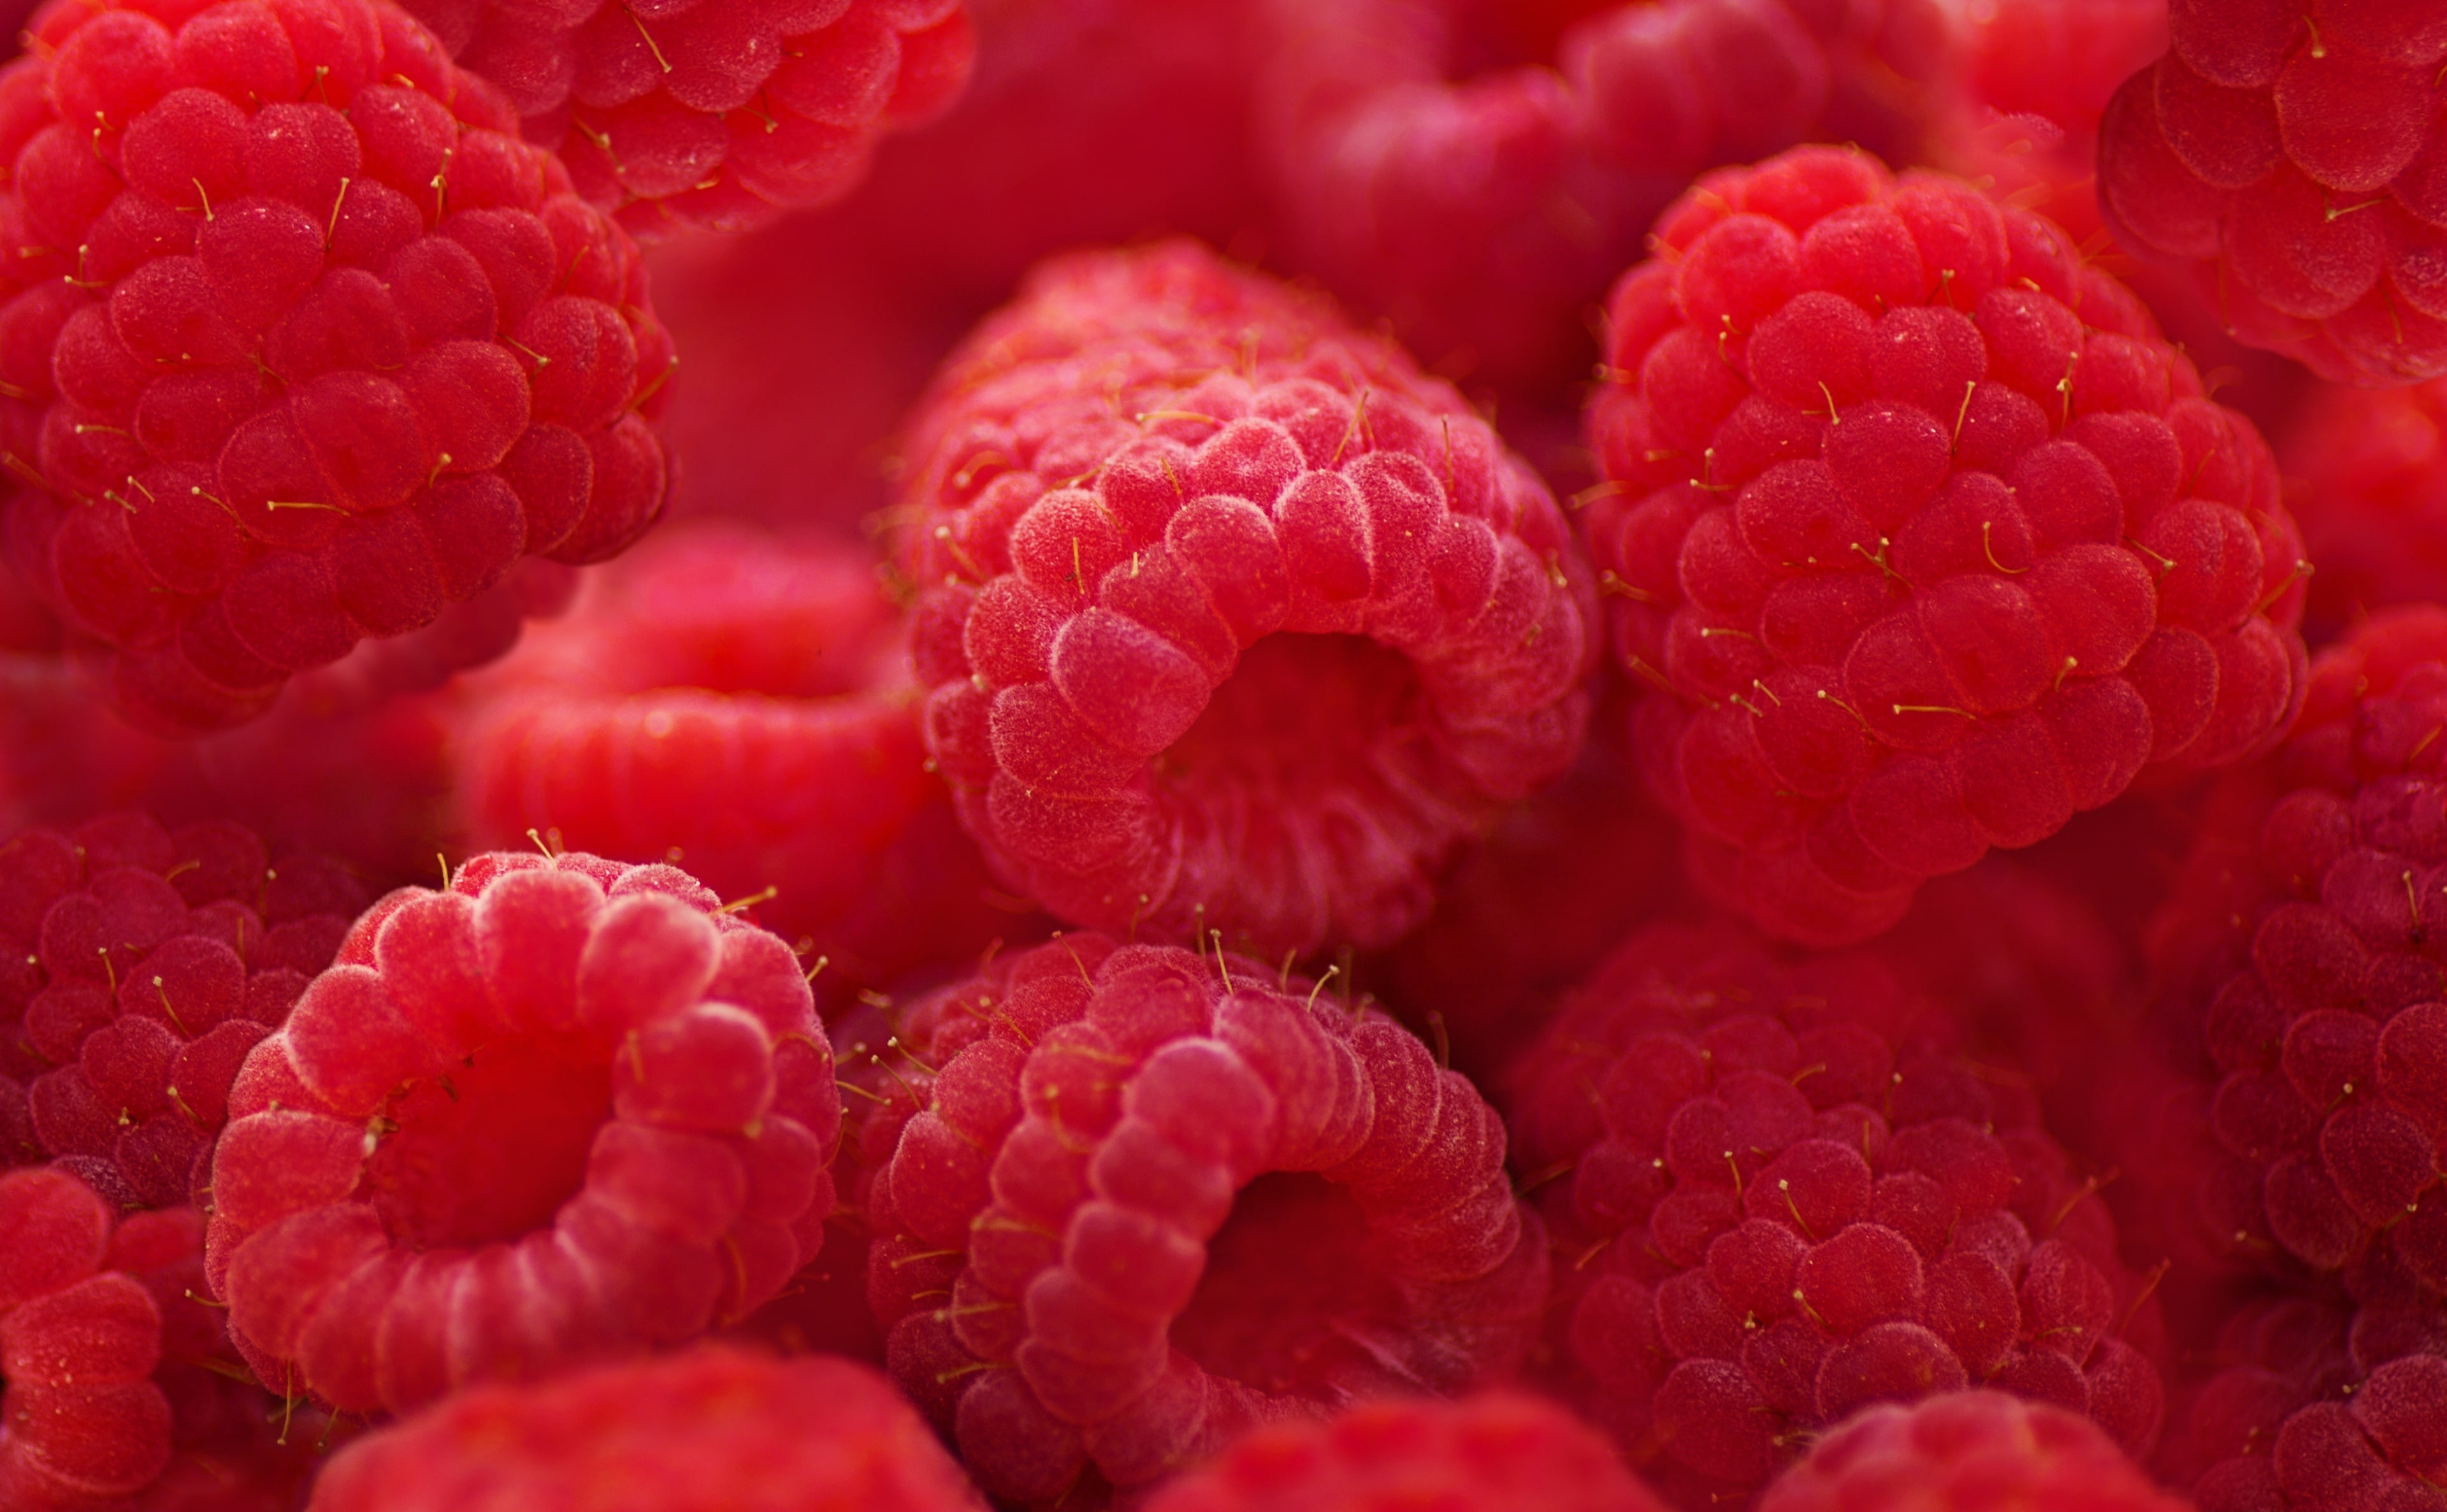 Raspberries Macro HD Wallpaper, raspberry fruits, Food and Drink